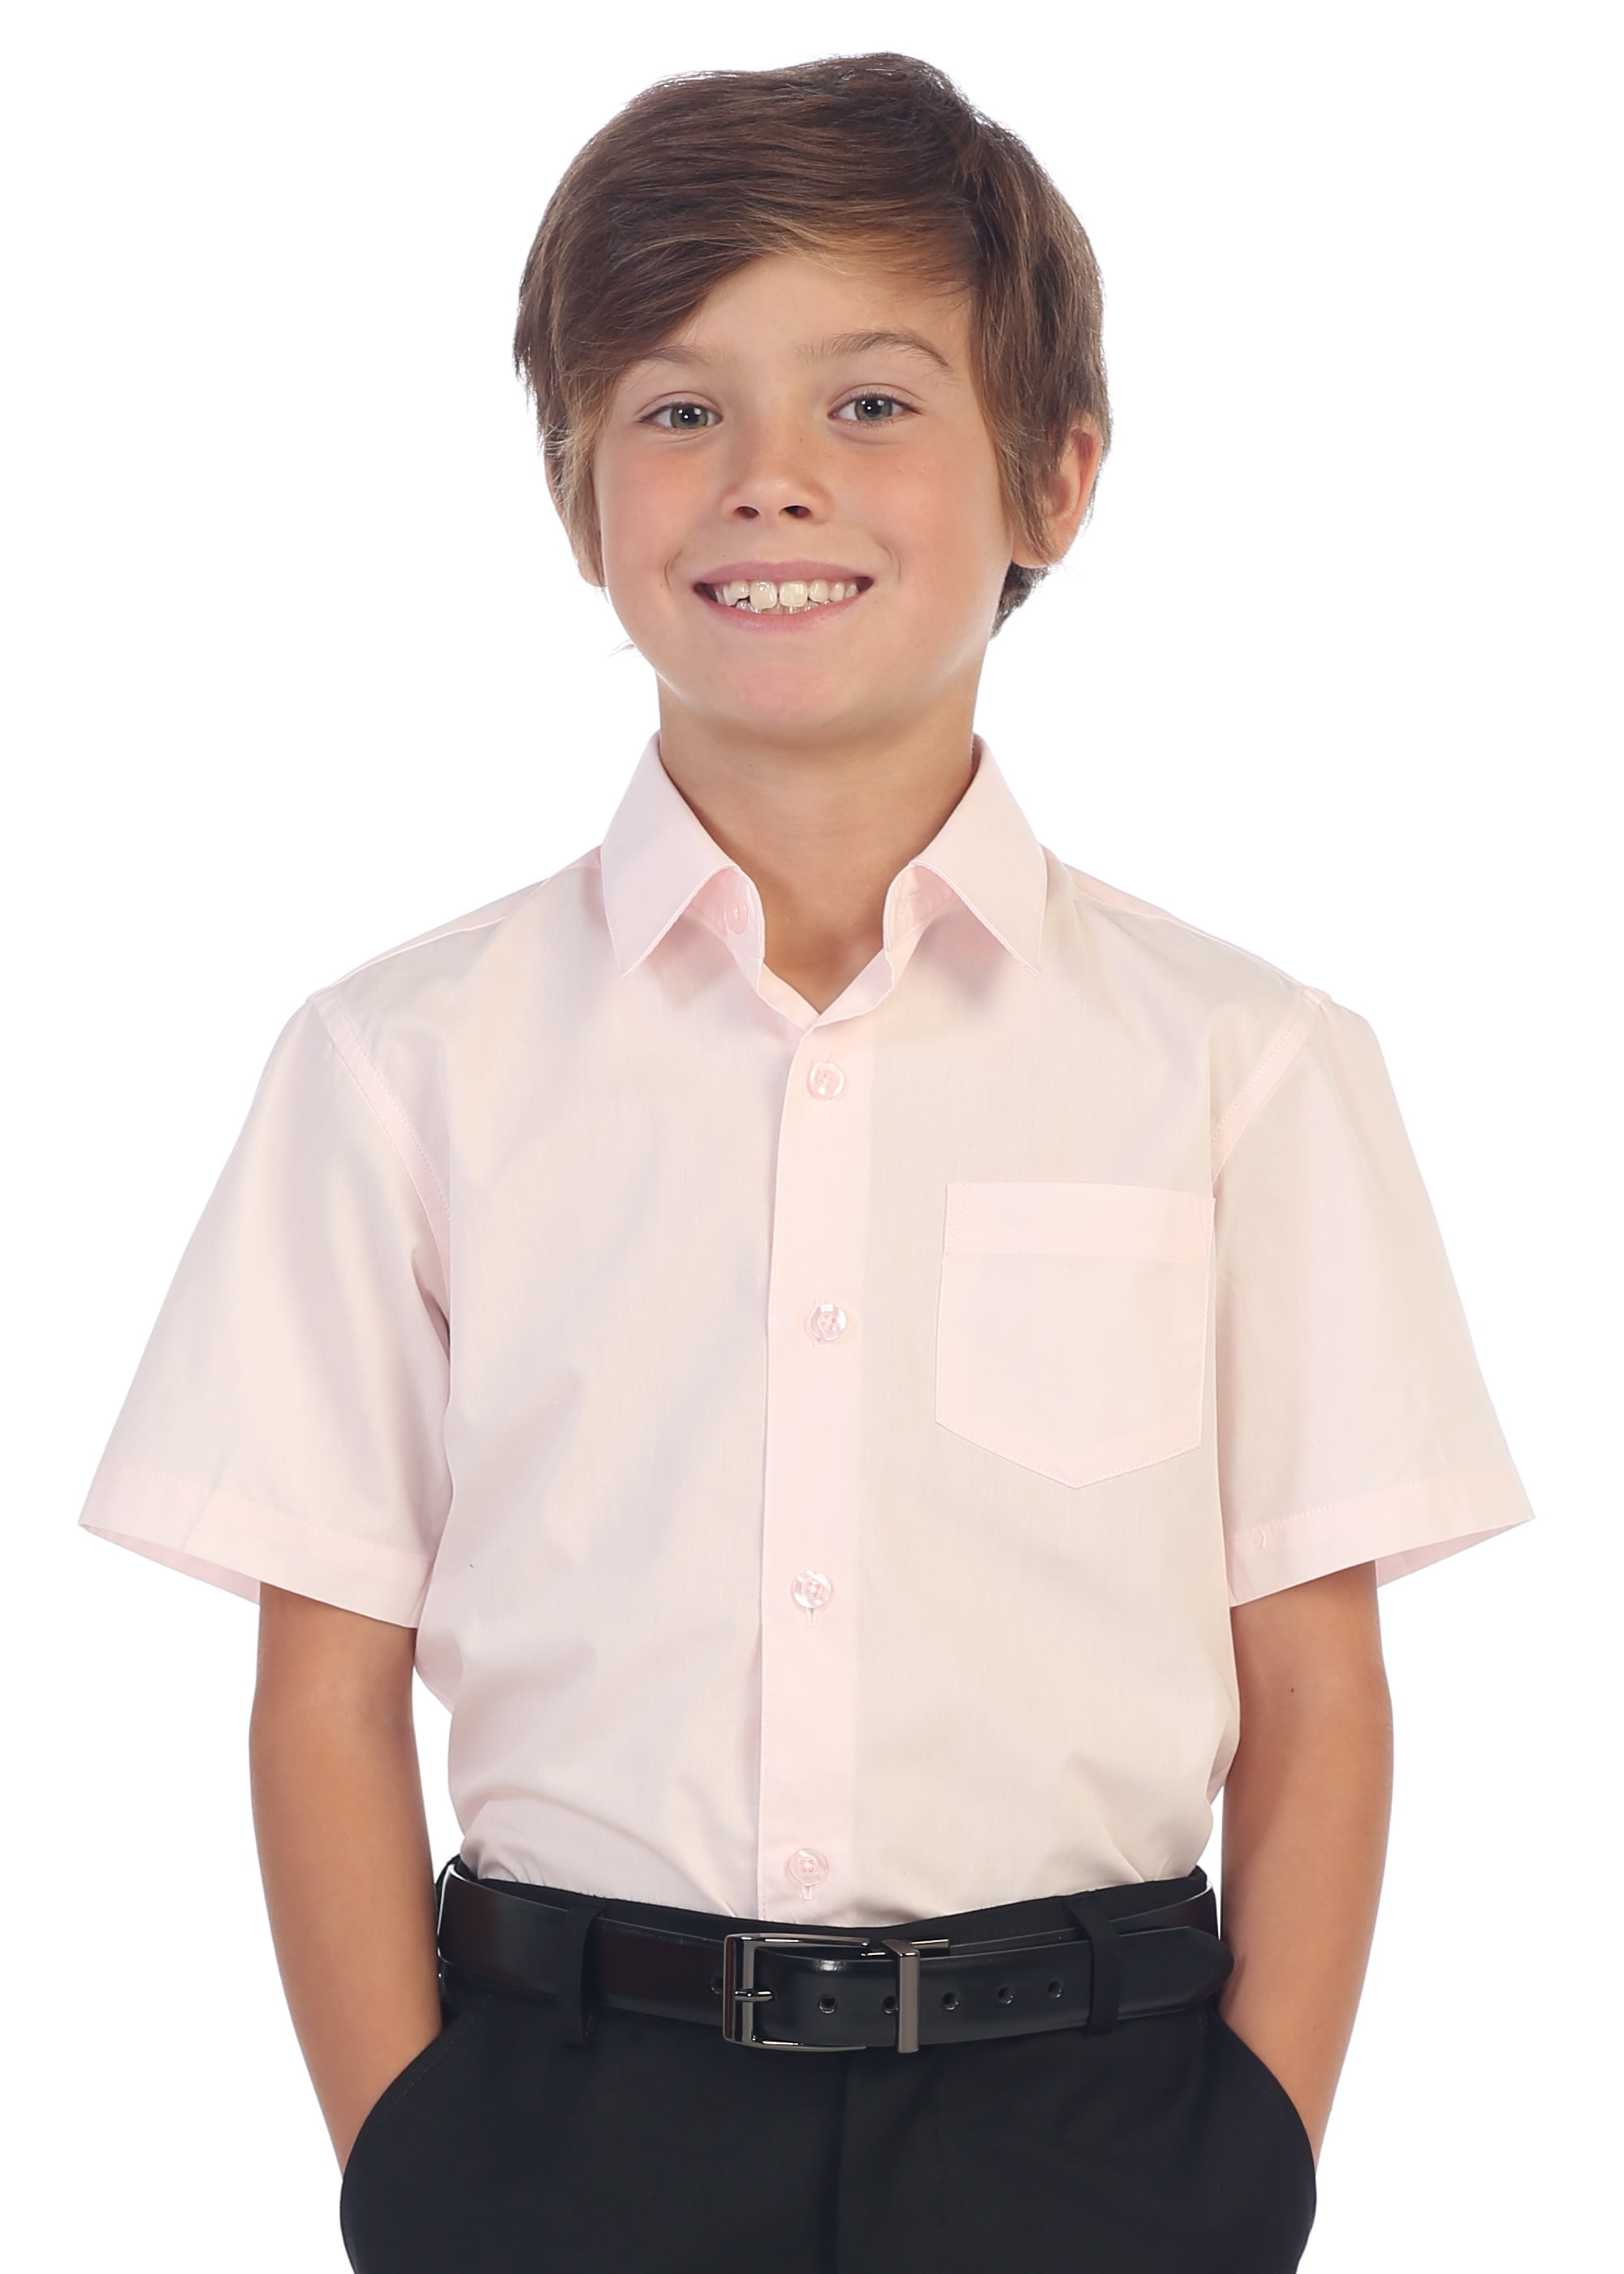 Gioberti Boy's Short Sleeve Solid Dress Shirt 